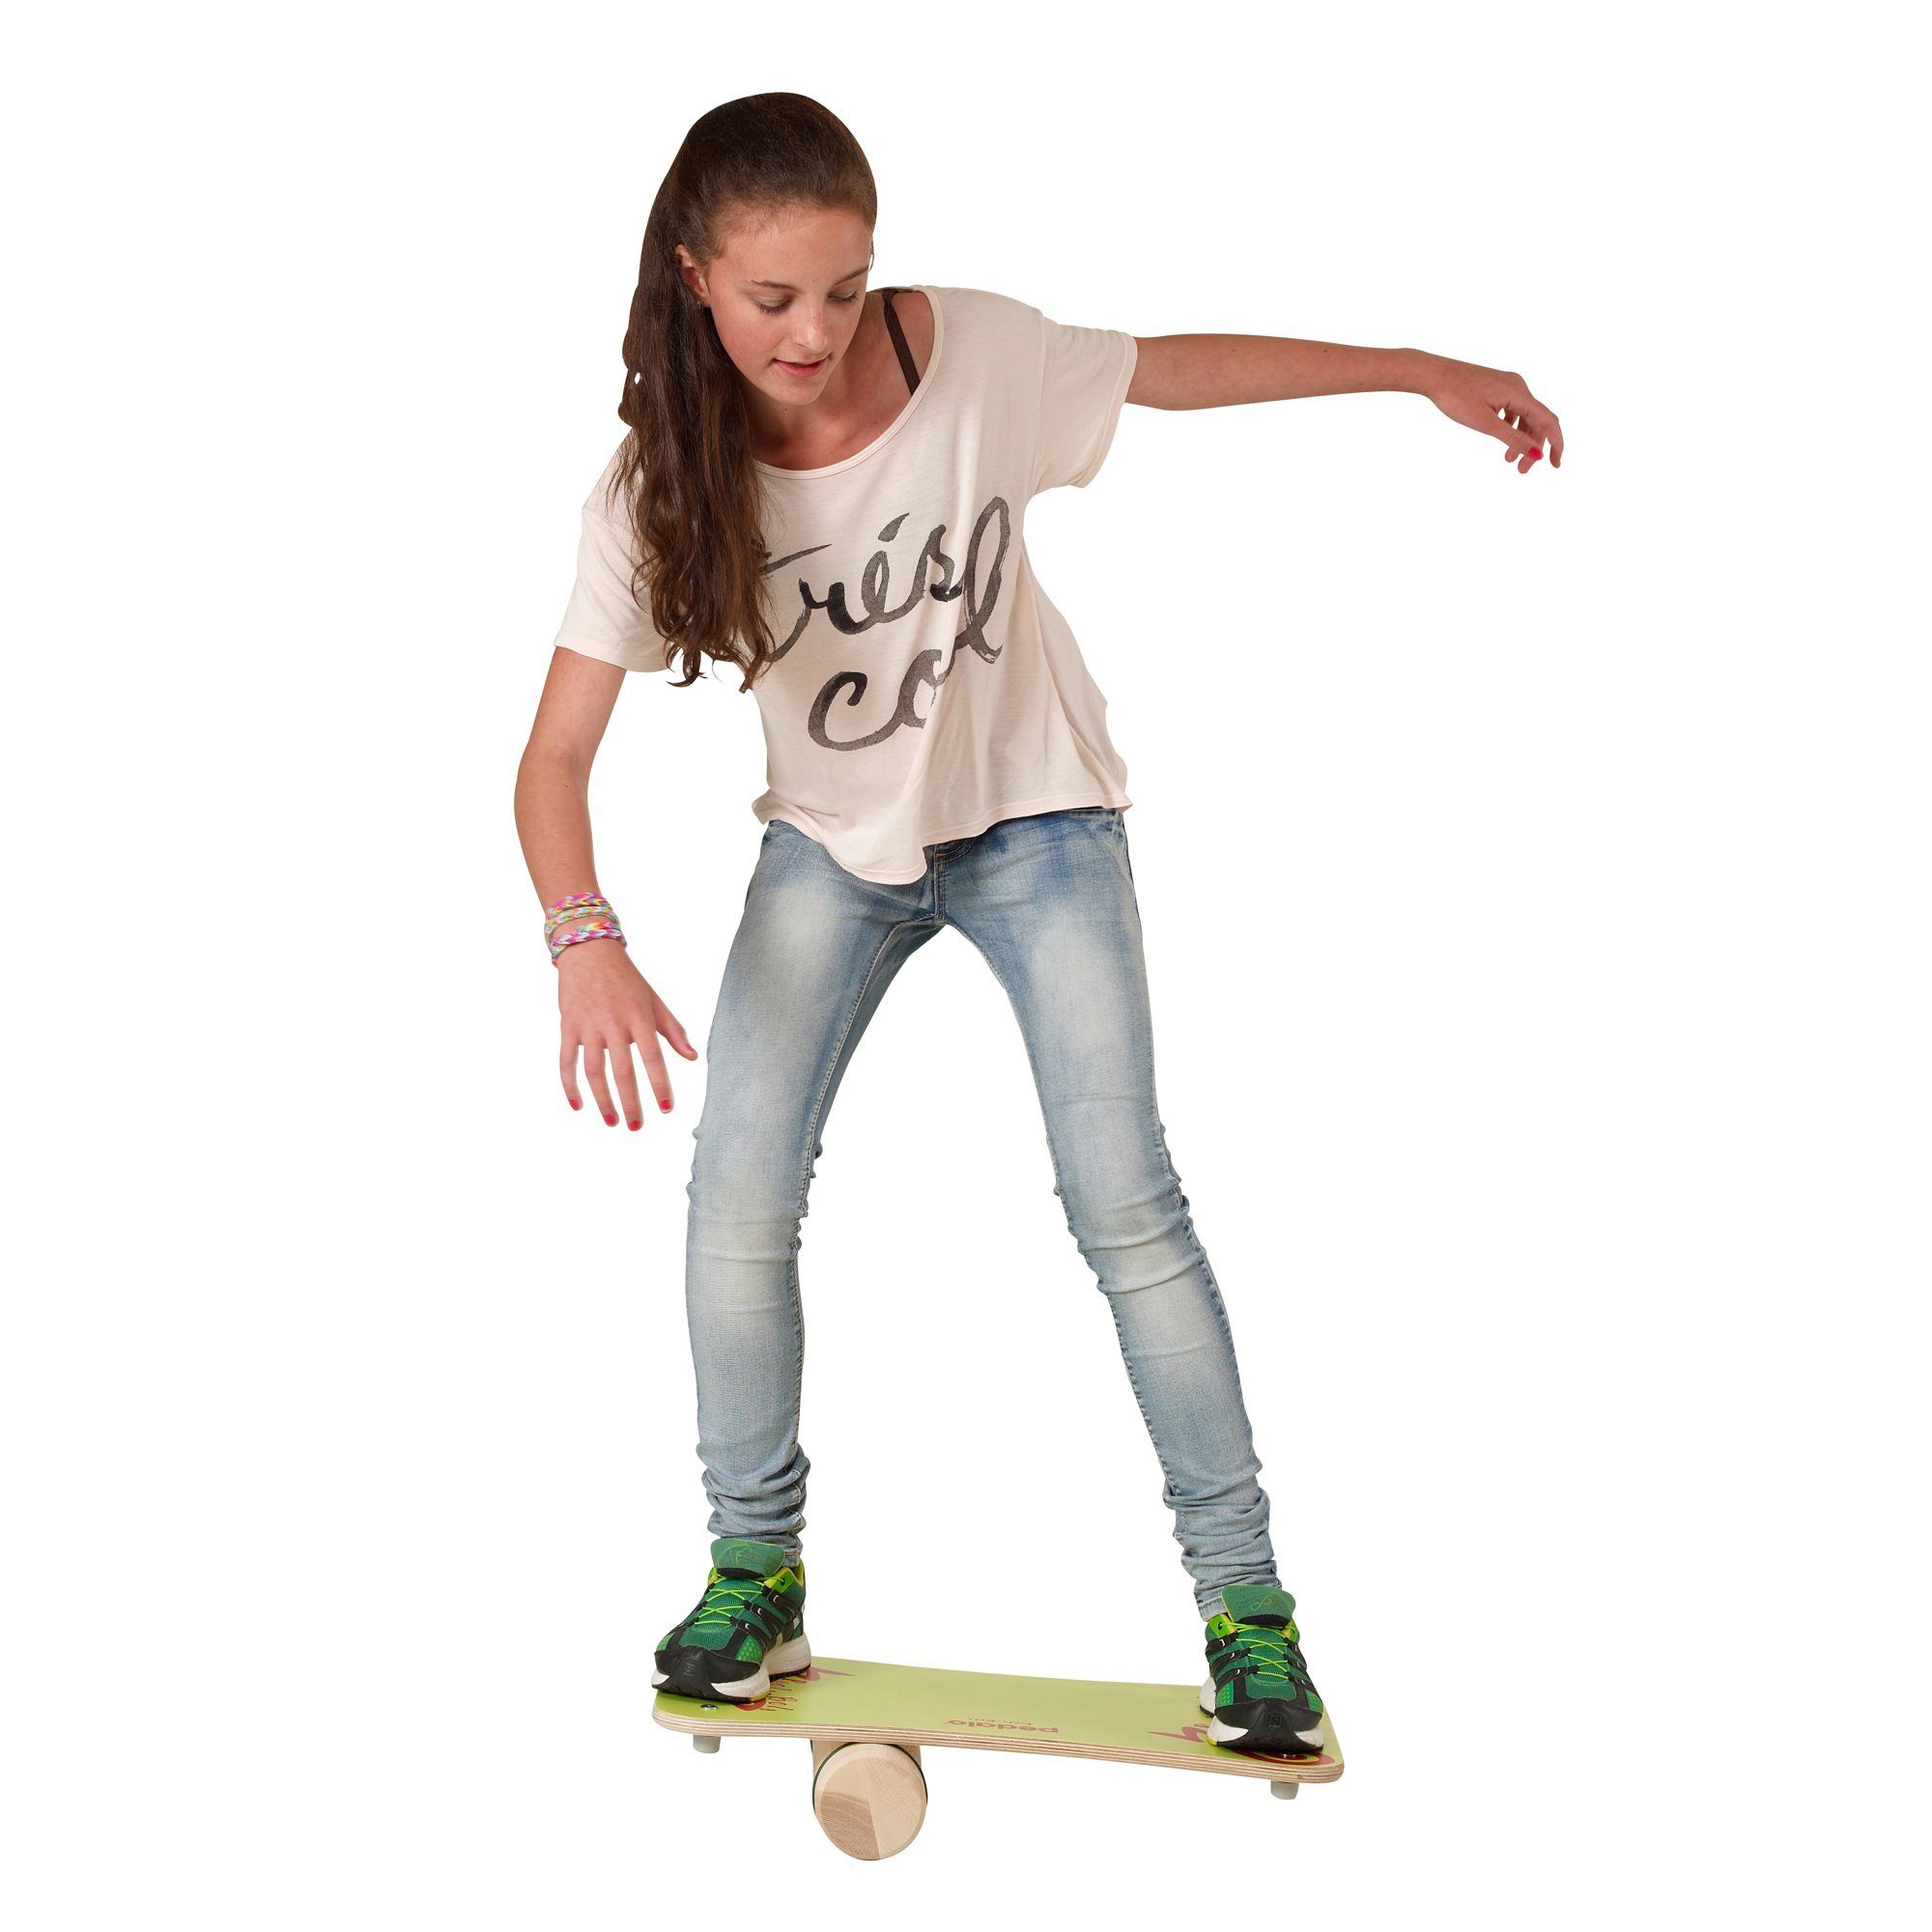 pedalo® Balanceboard Pedalo Rola-Bola Balanceboard, Gleichgewichtstrainer, Reflextrainer grün